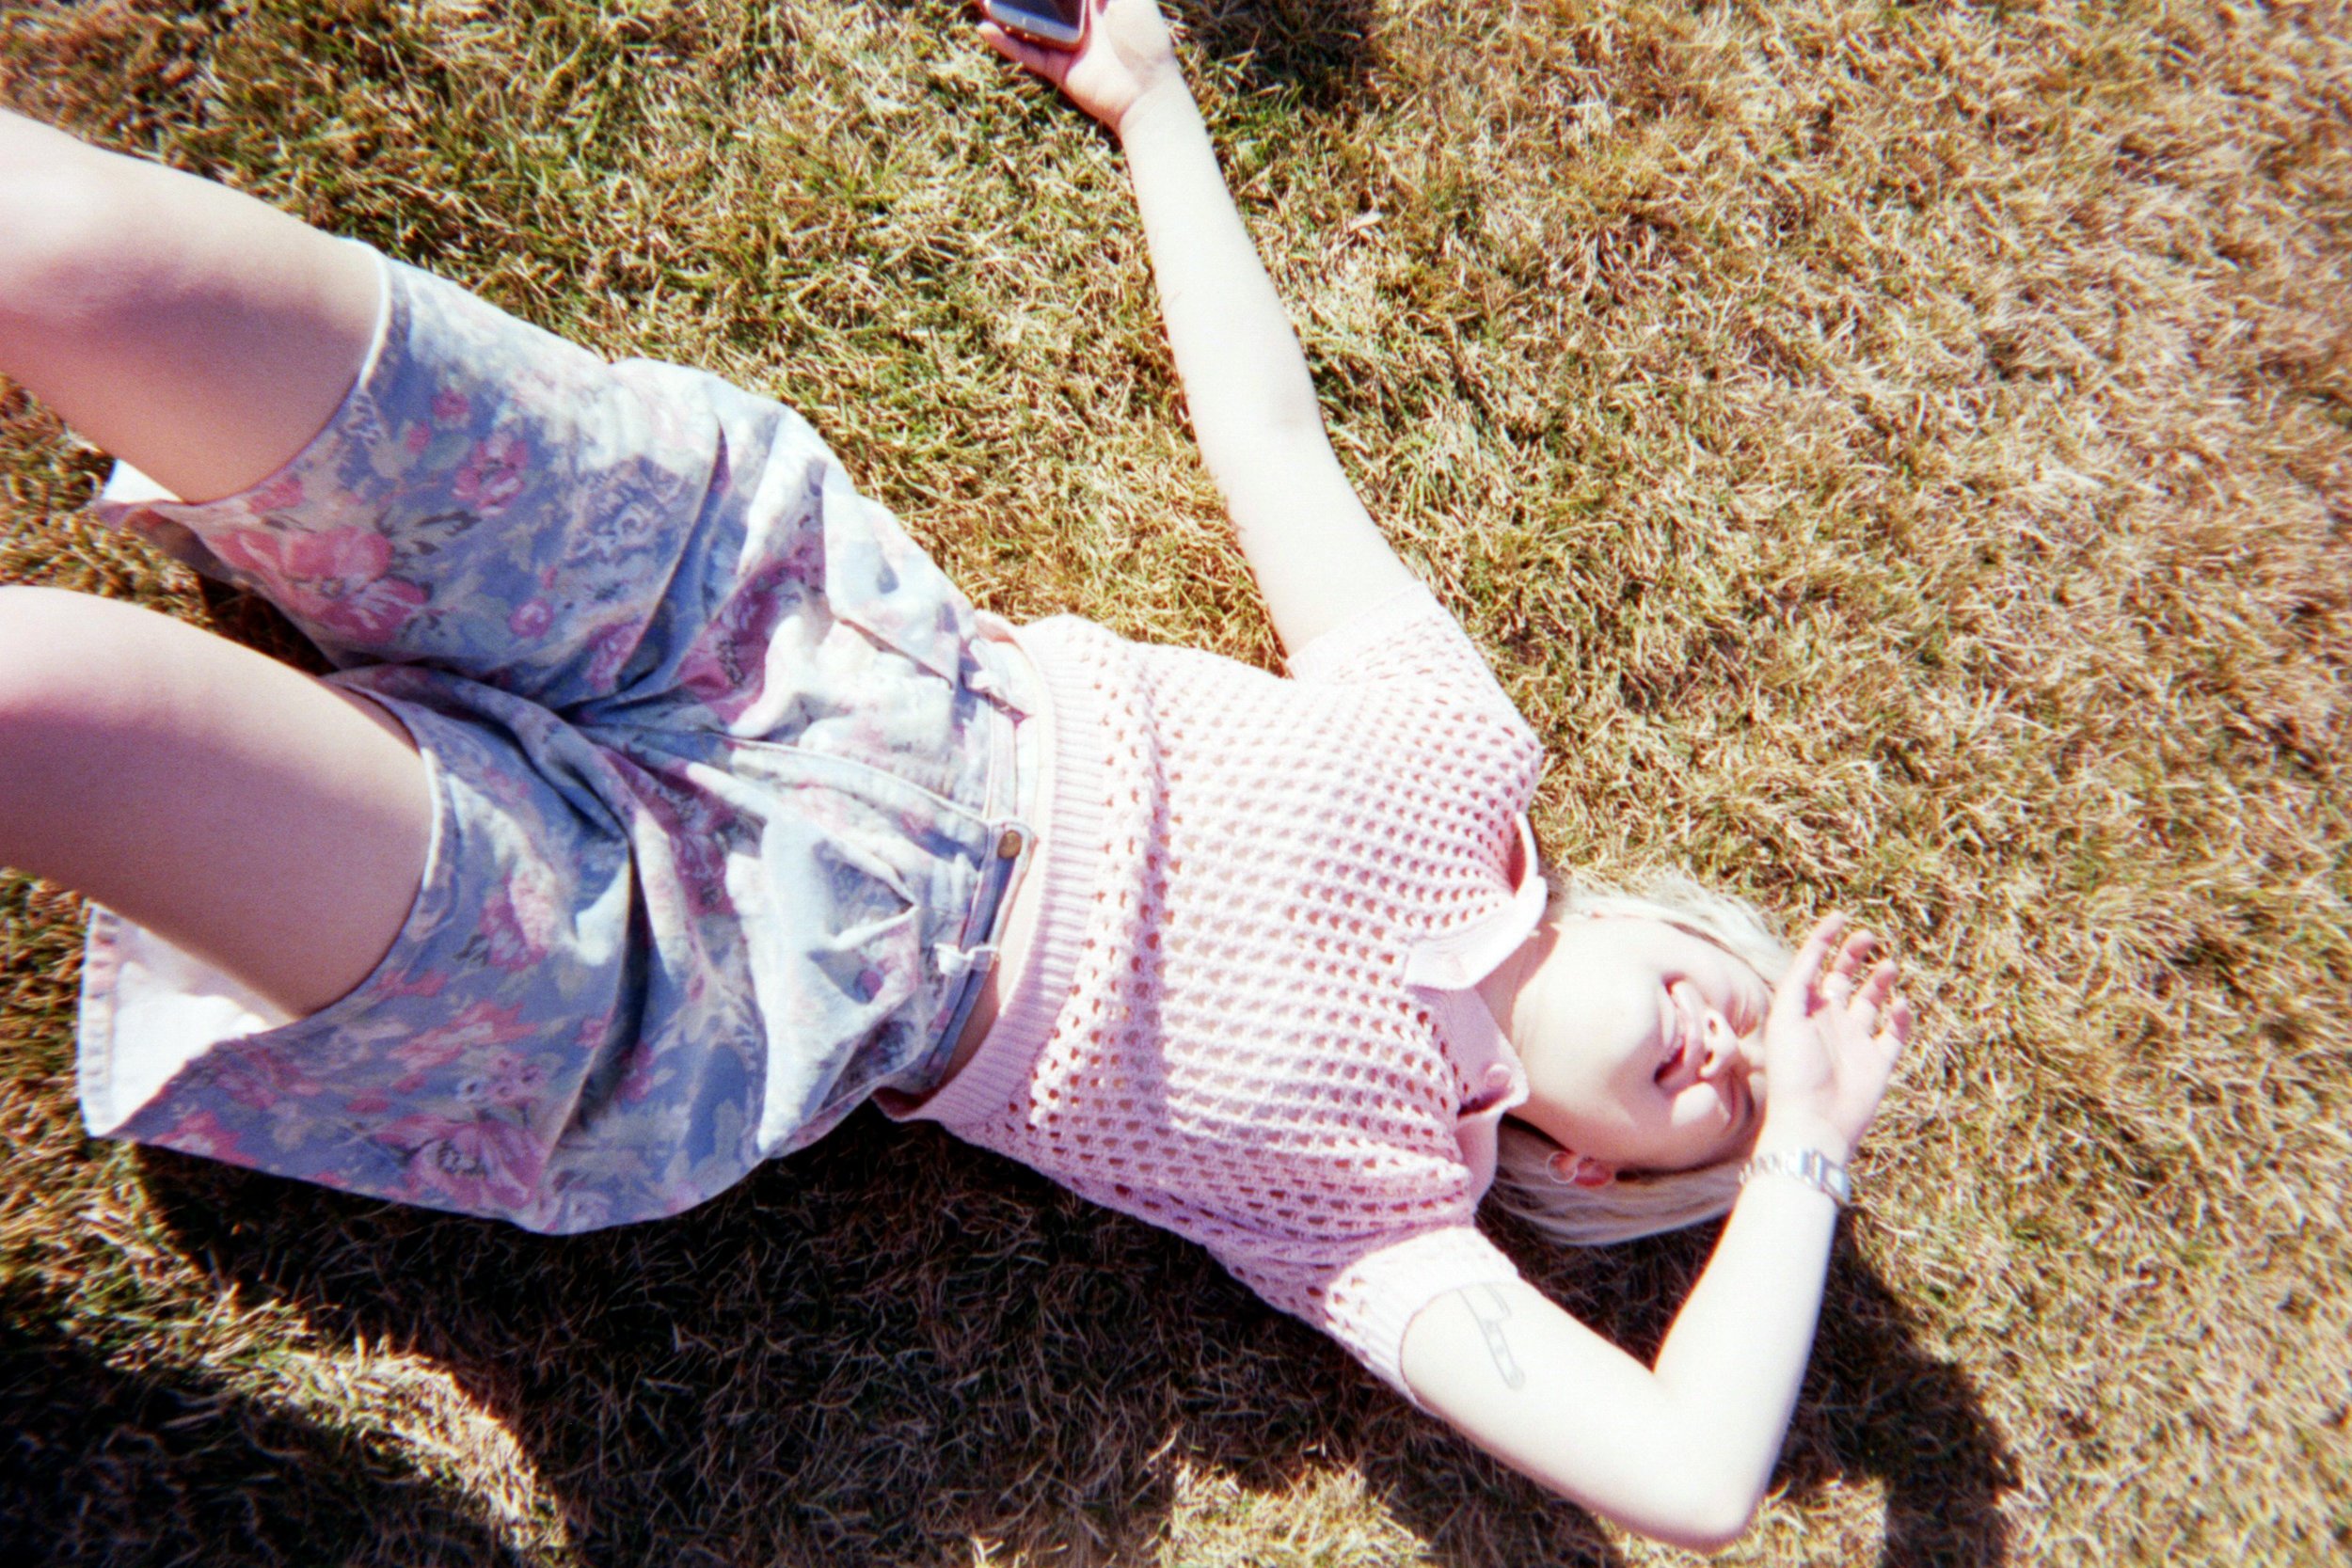 nancy on the lawn - CU - spring17.jpg